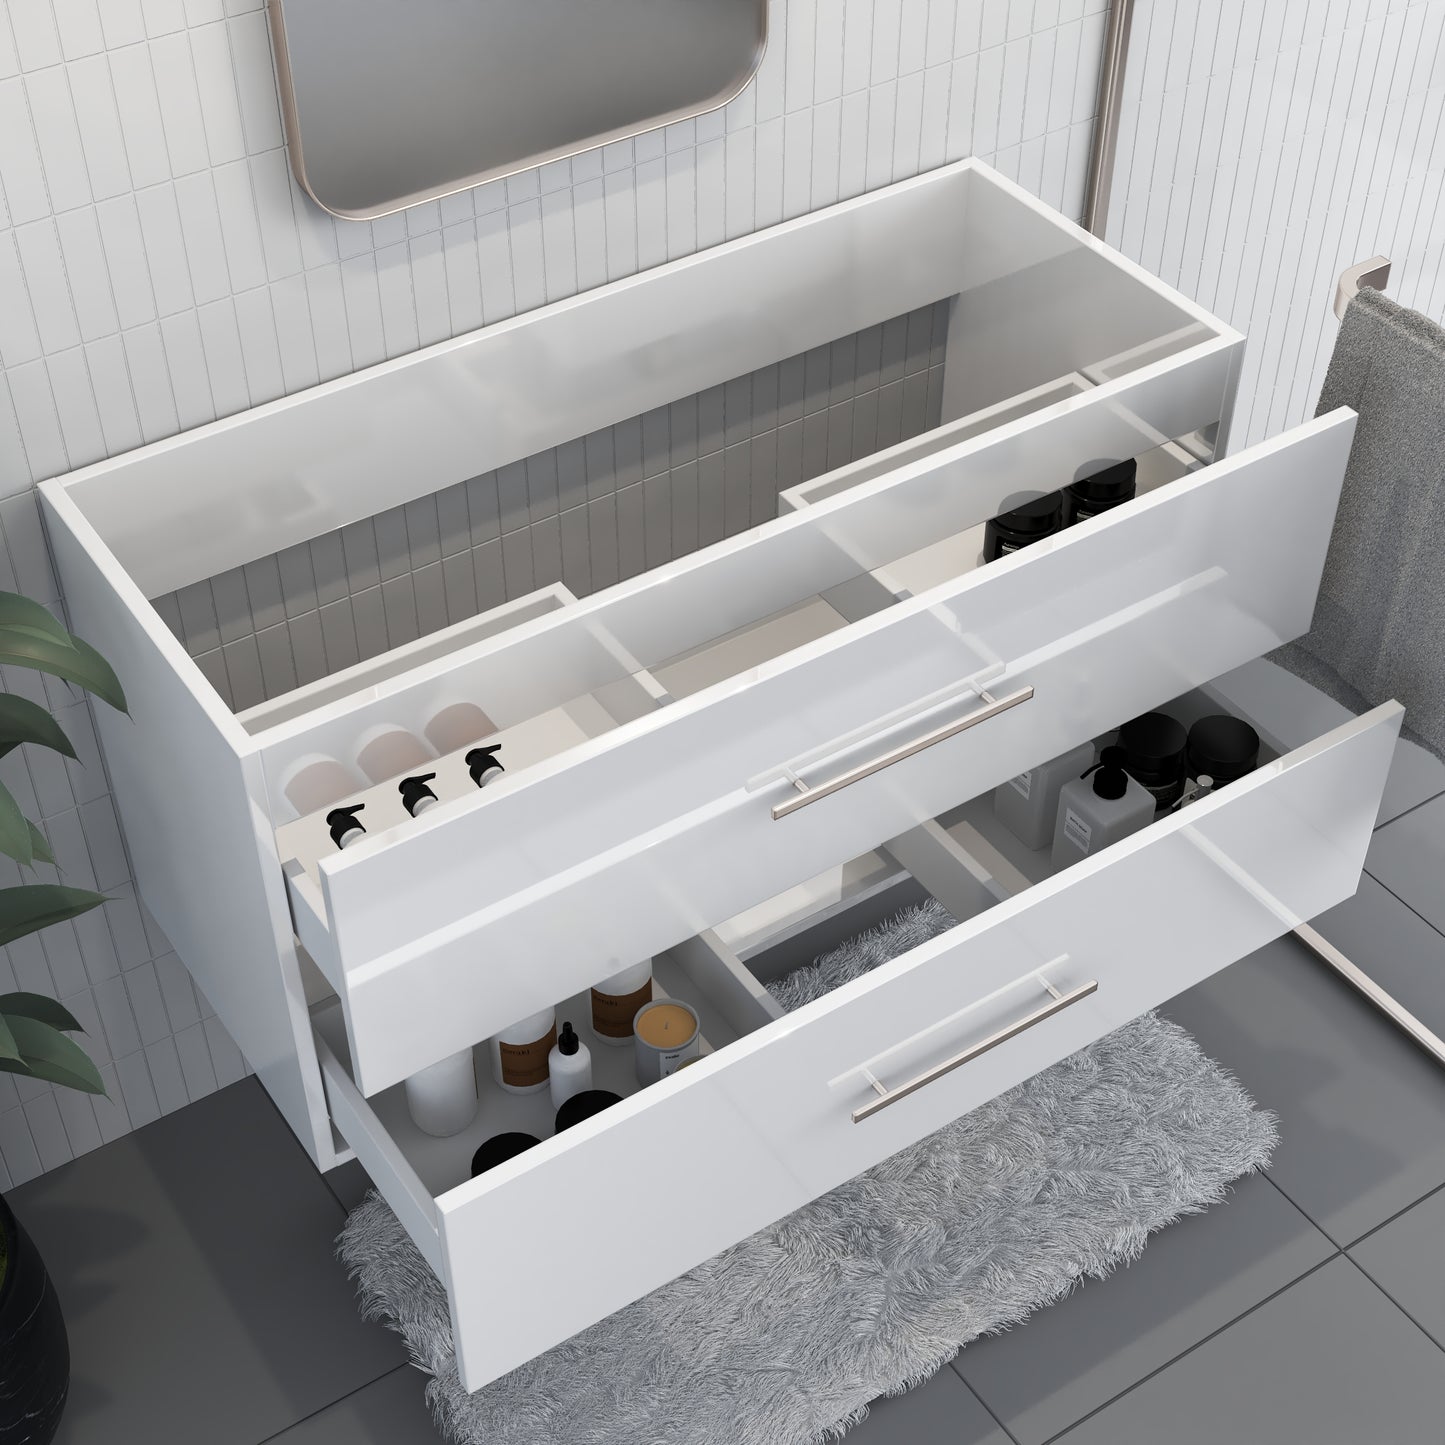 Napa 48" Bathroom Vanity Cabinet Only